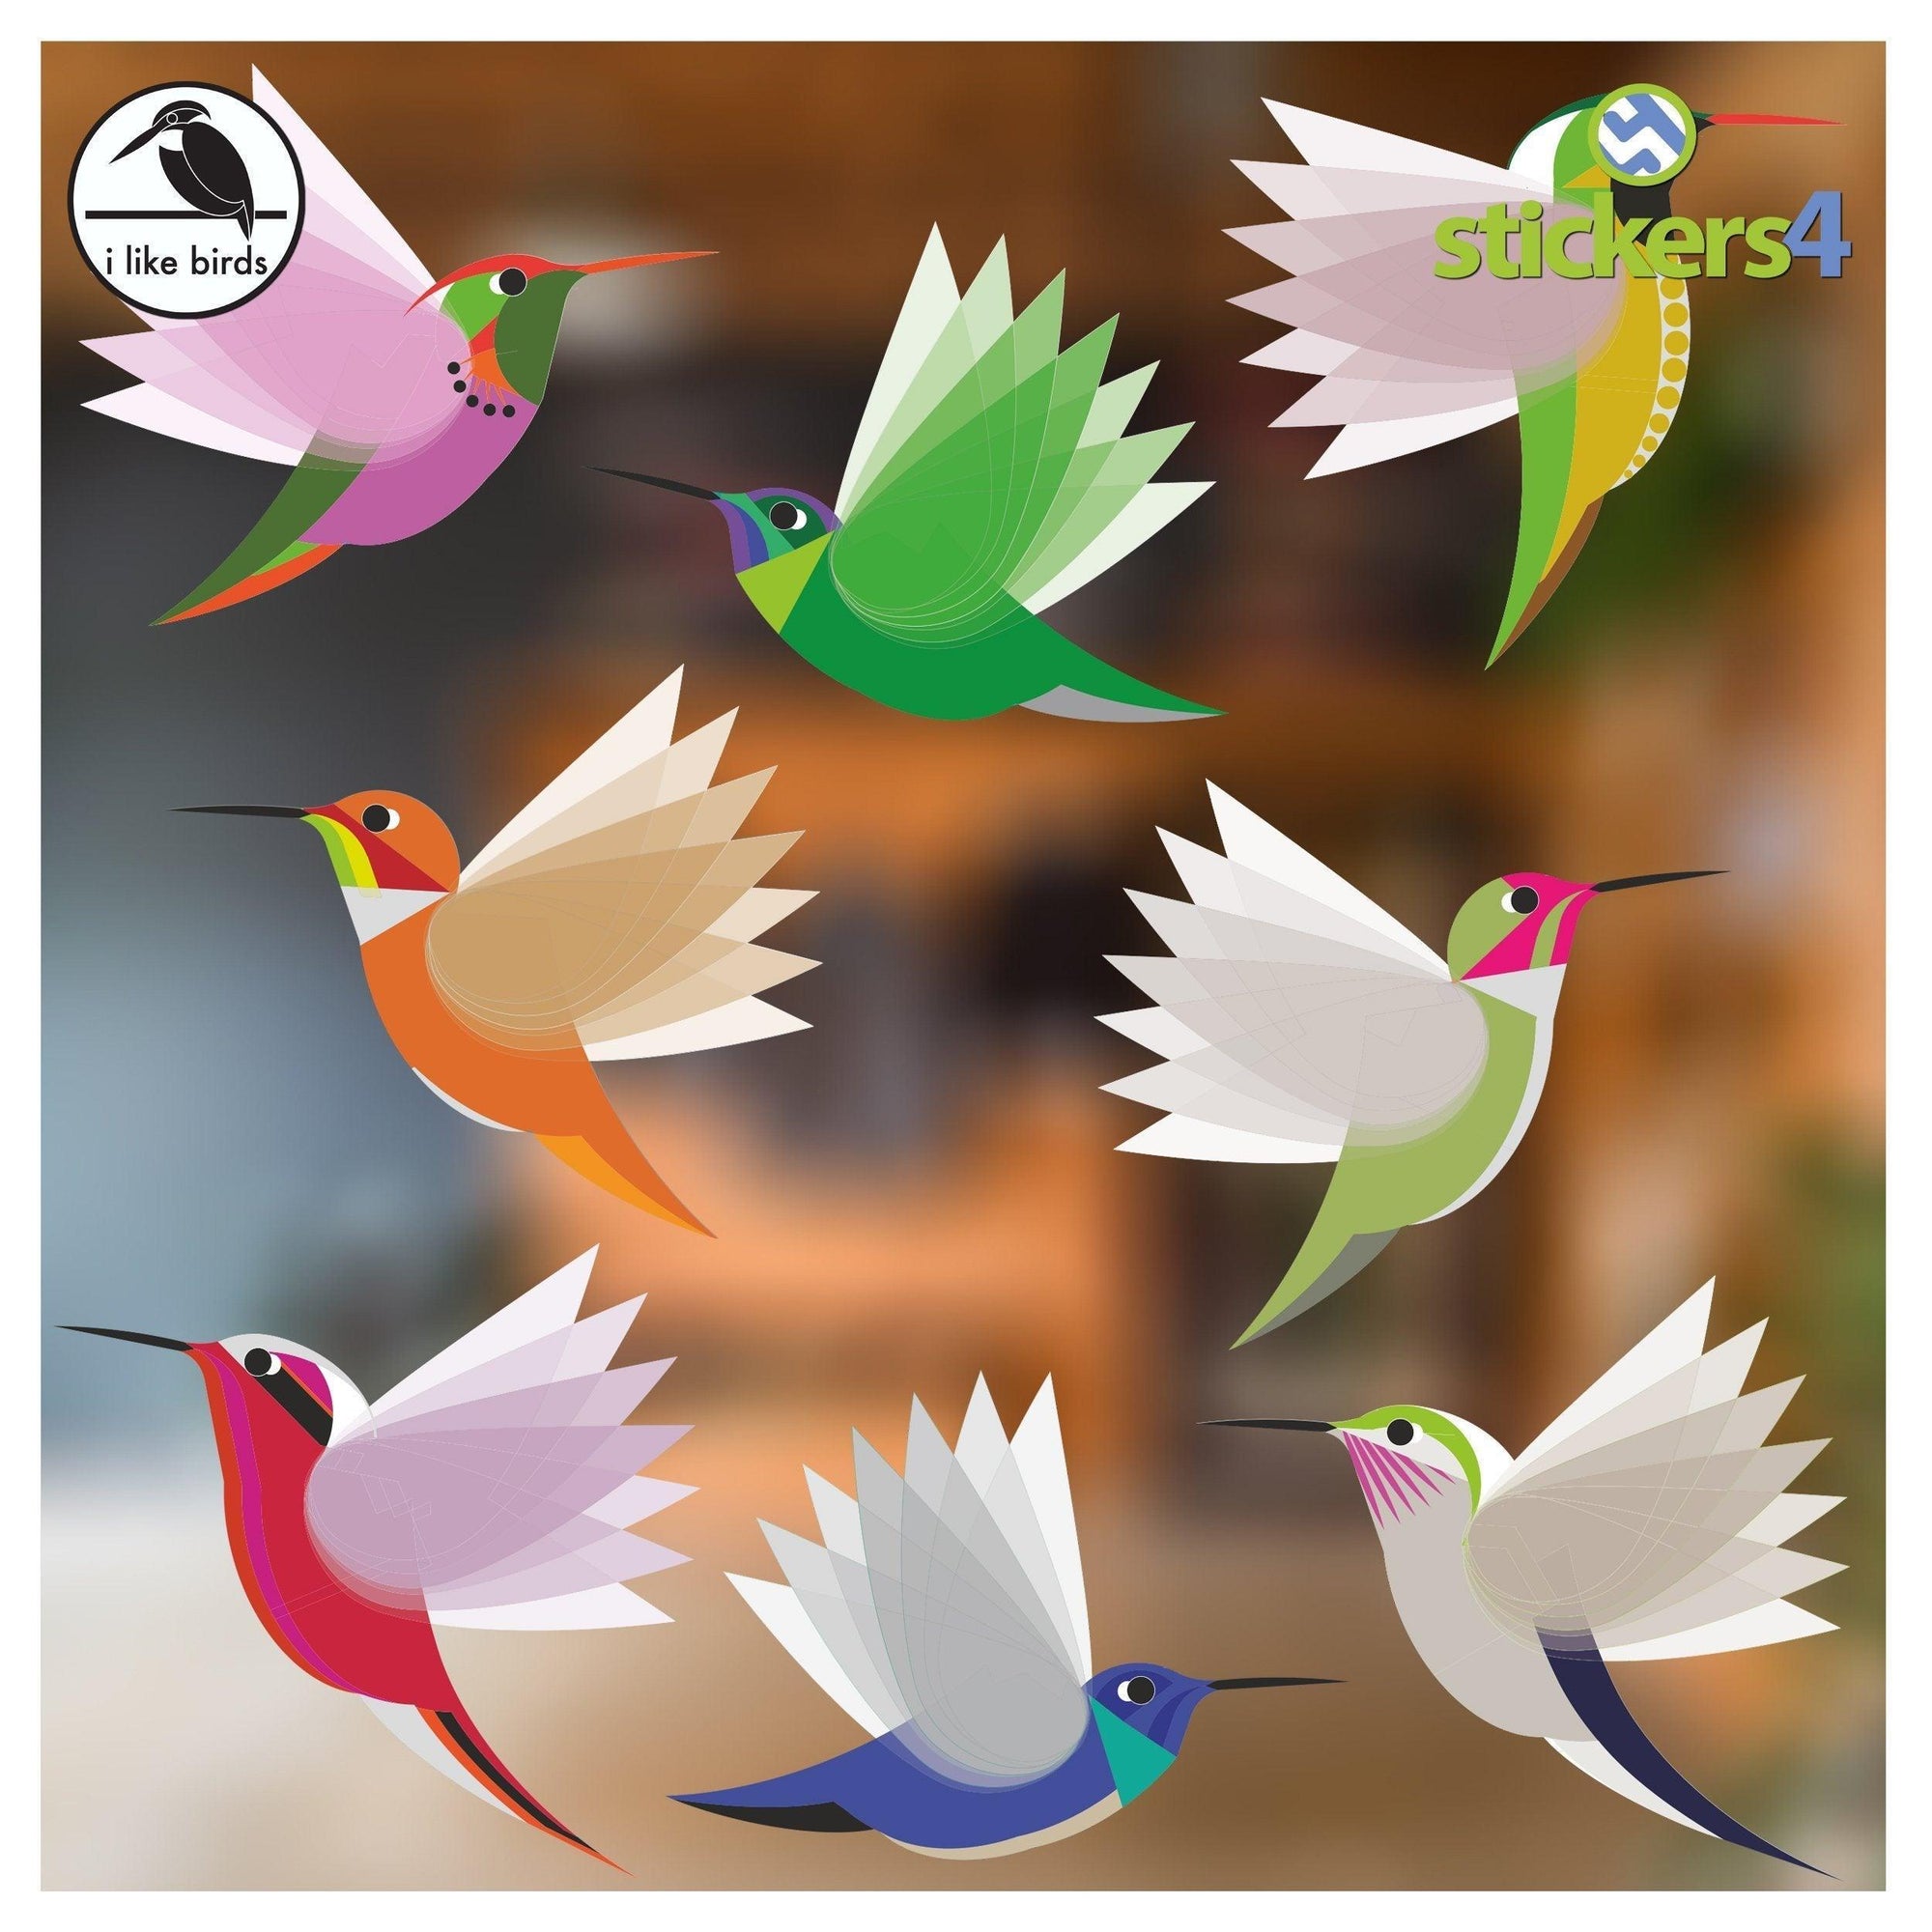 I Like Birds - Exotic Hummingbirds, Set of 8 Large Decorative Bird Strike Prevention